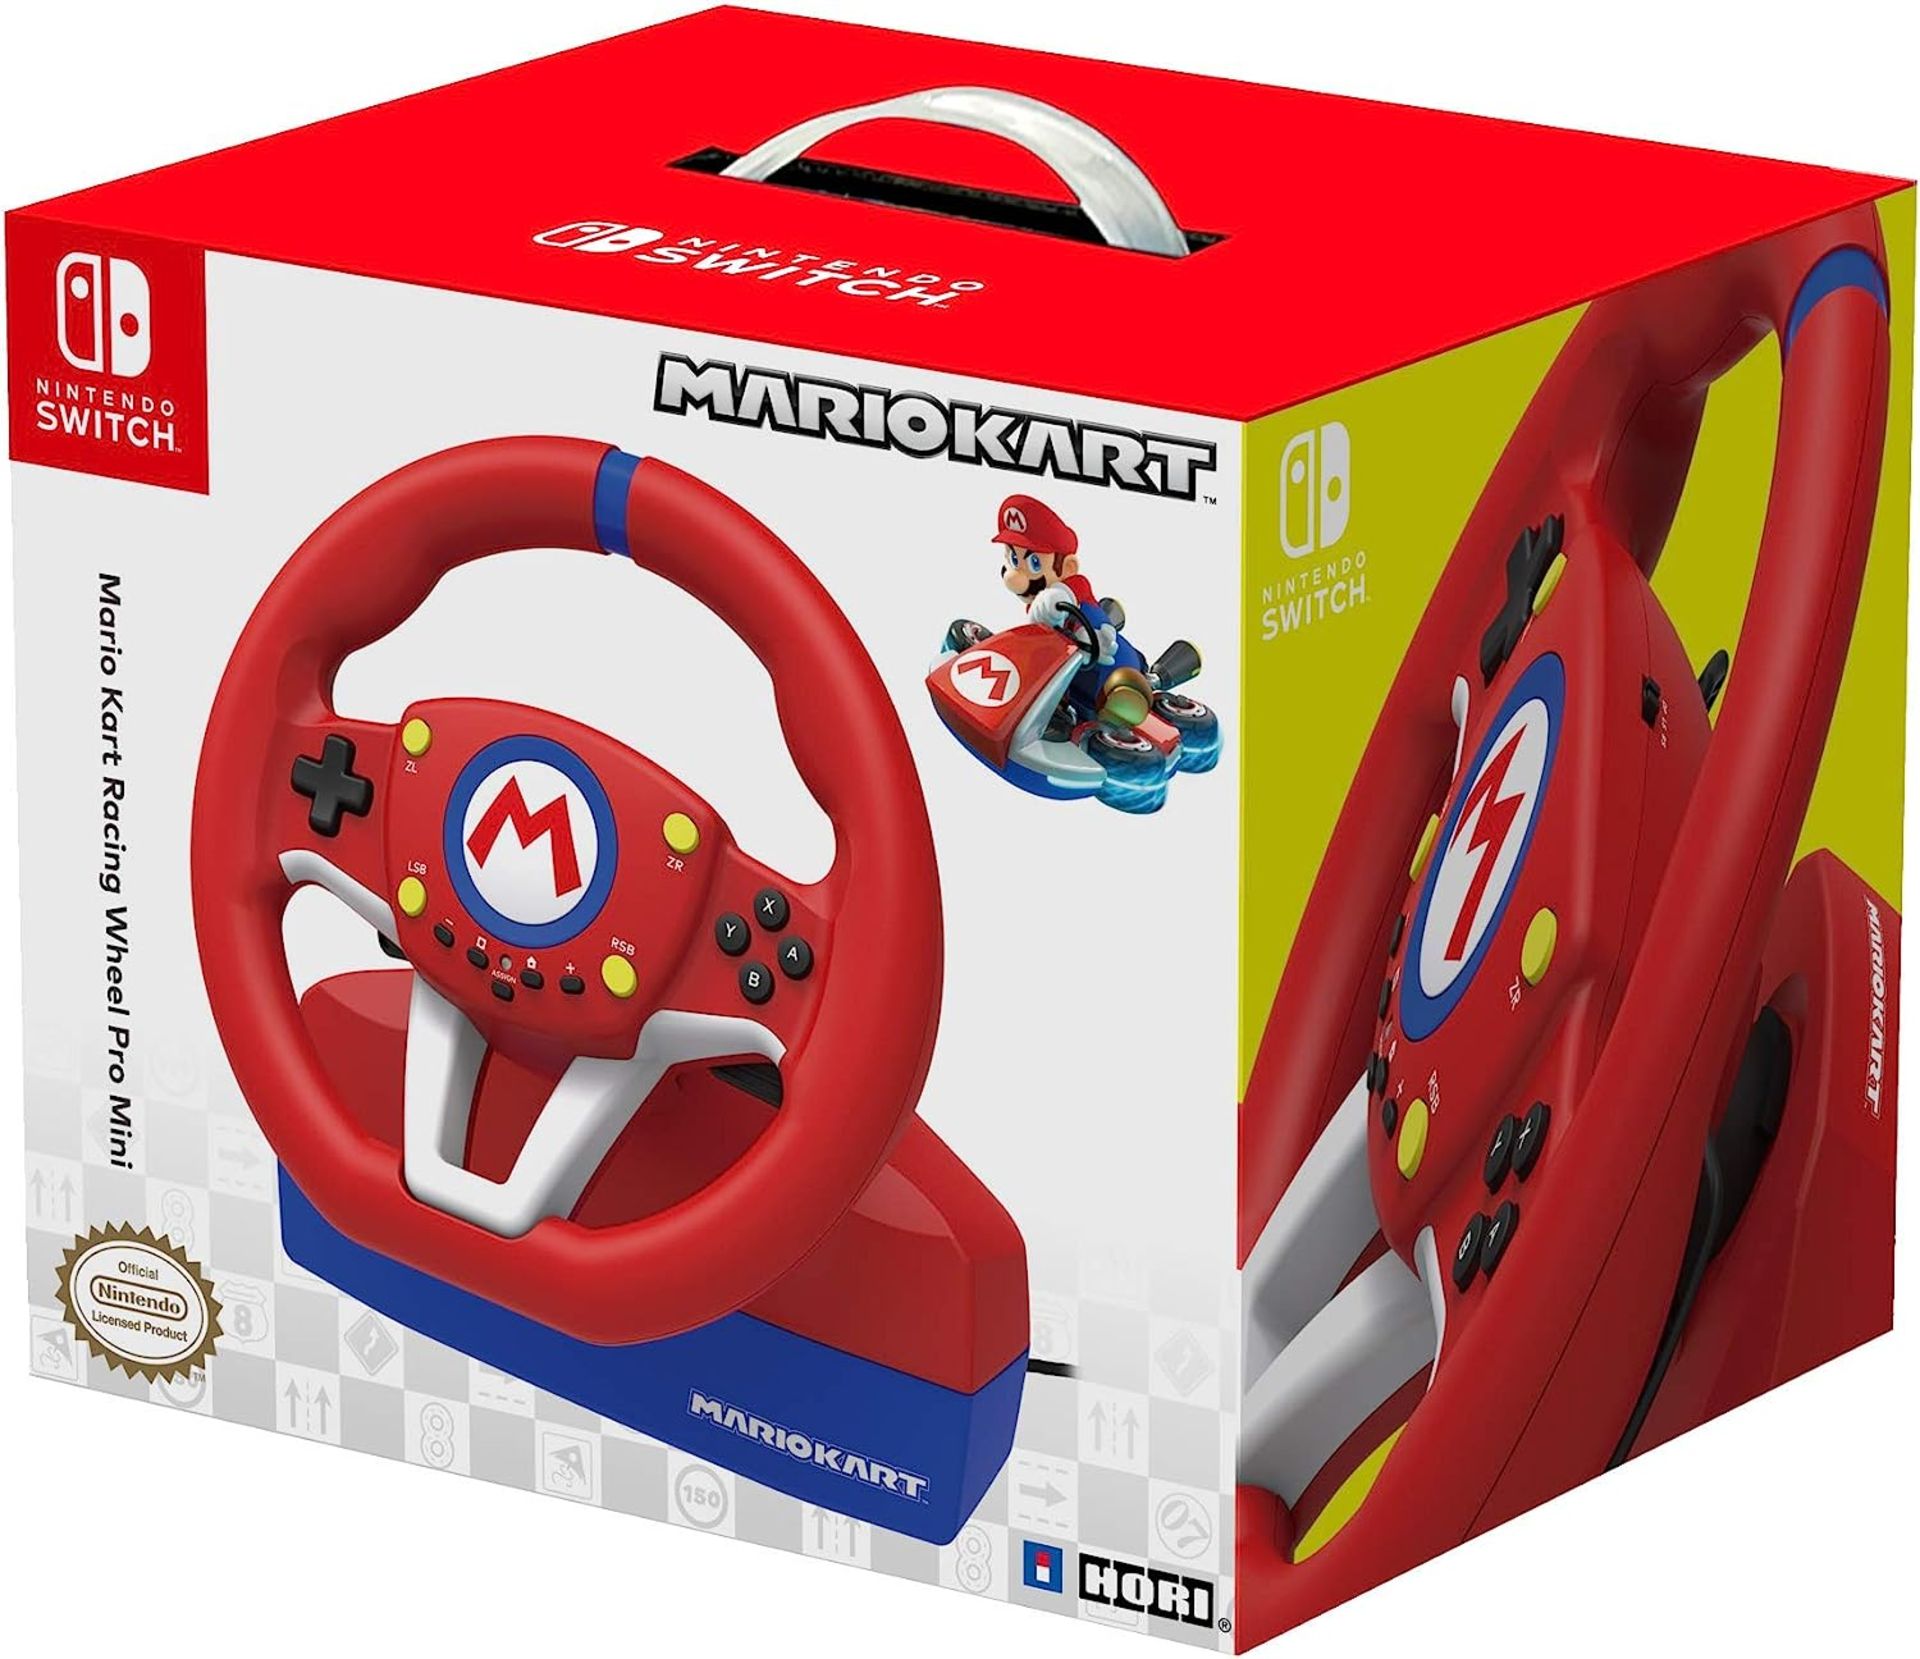 RAW RETURN - 5 x HORI Mario Kart Racing Wheel Pro Mini for Nintendo Switch - RRP NEW WOULD BE £325! - Image 6 of 9